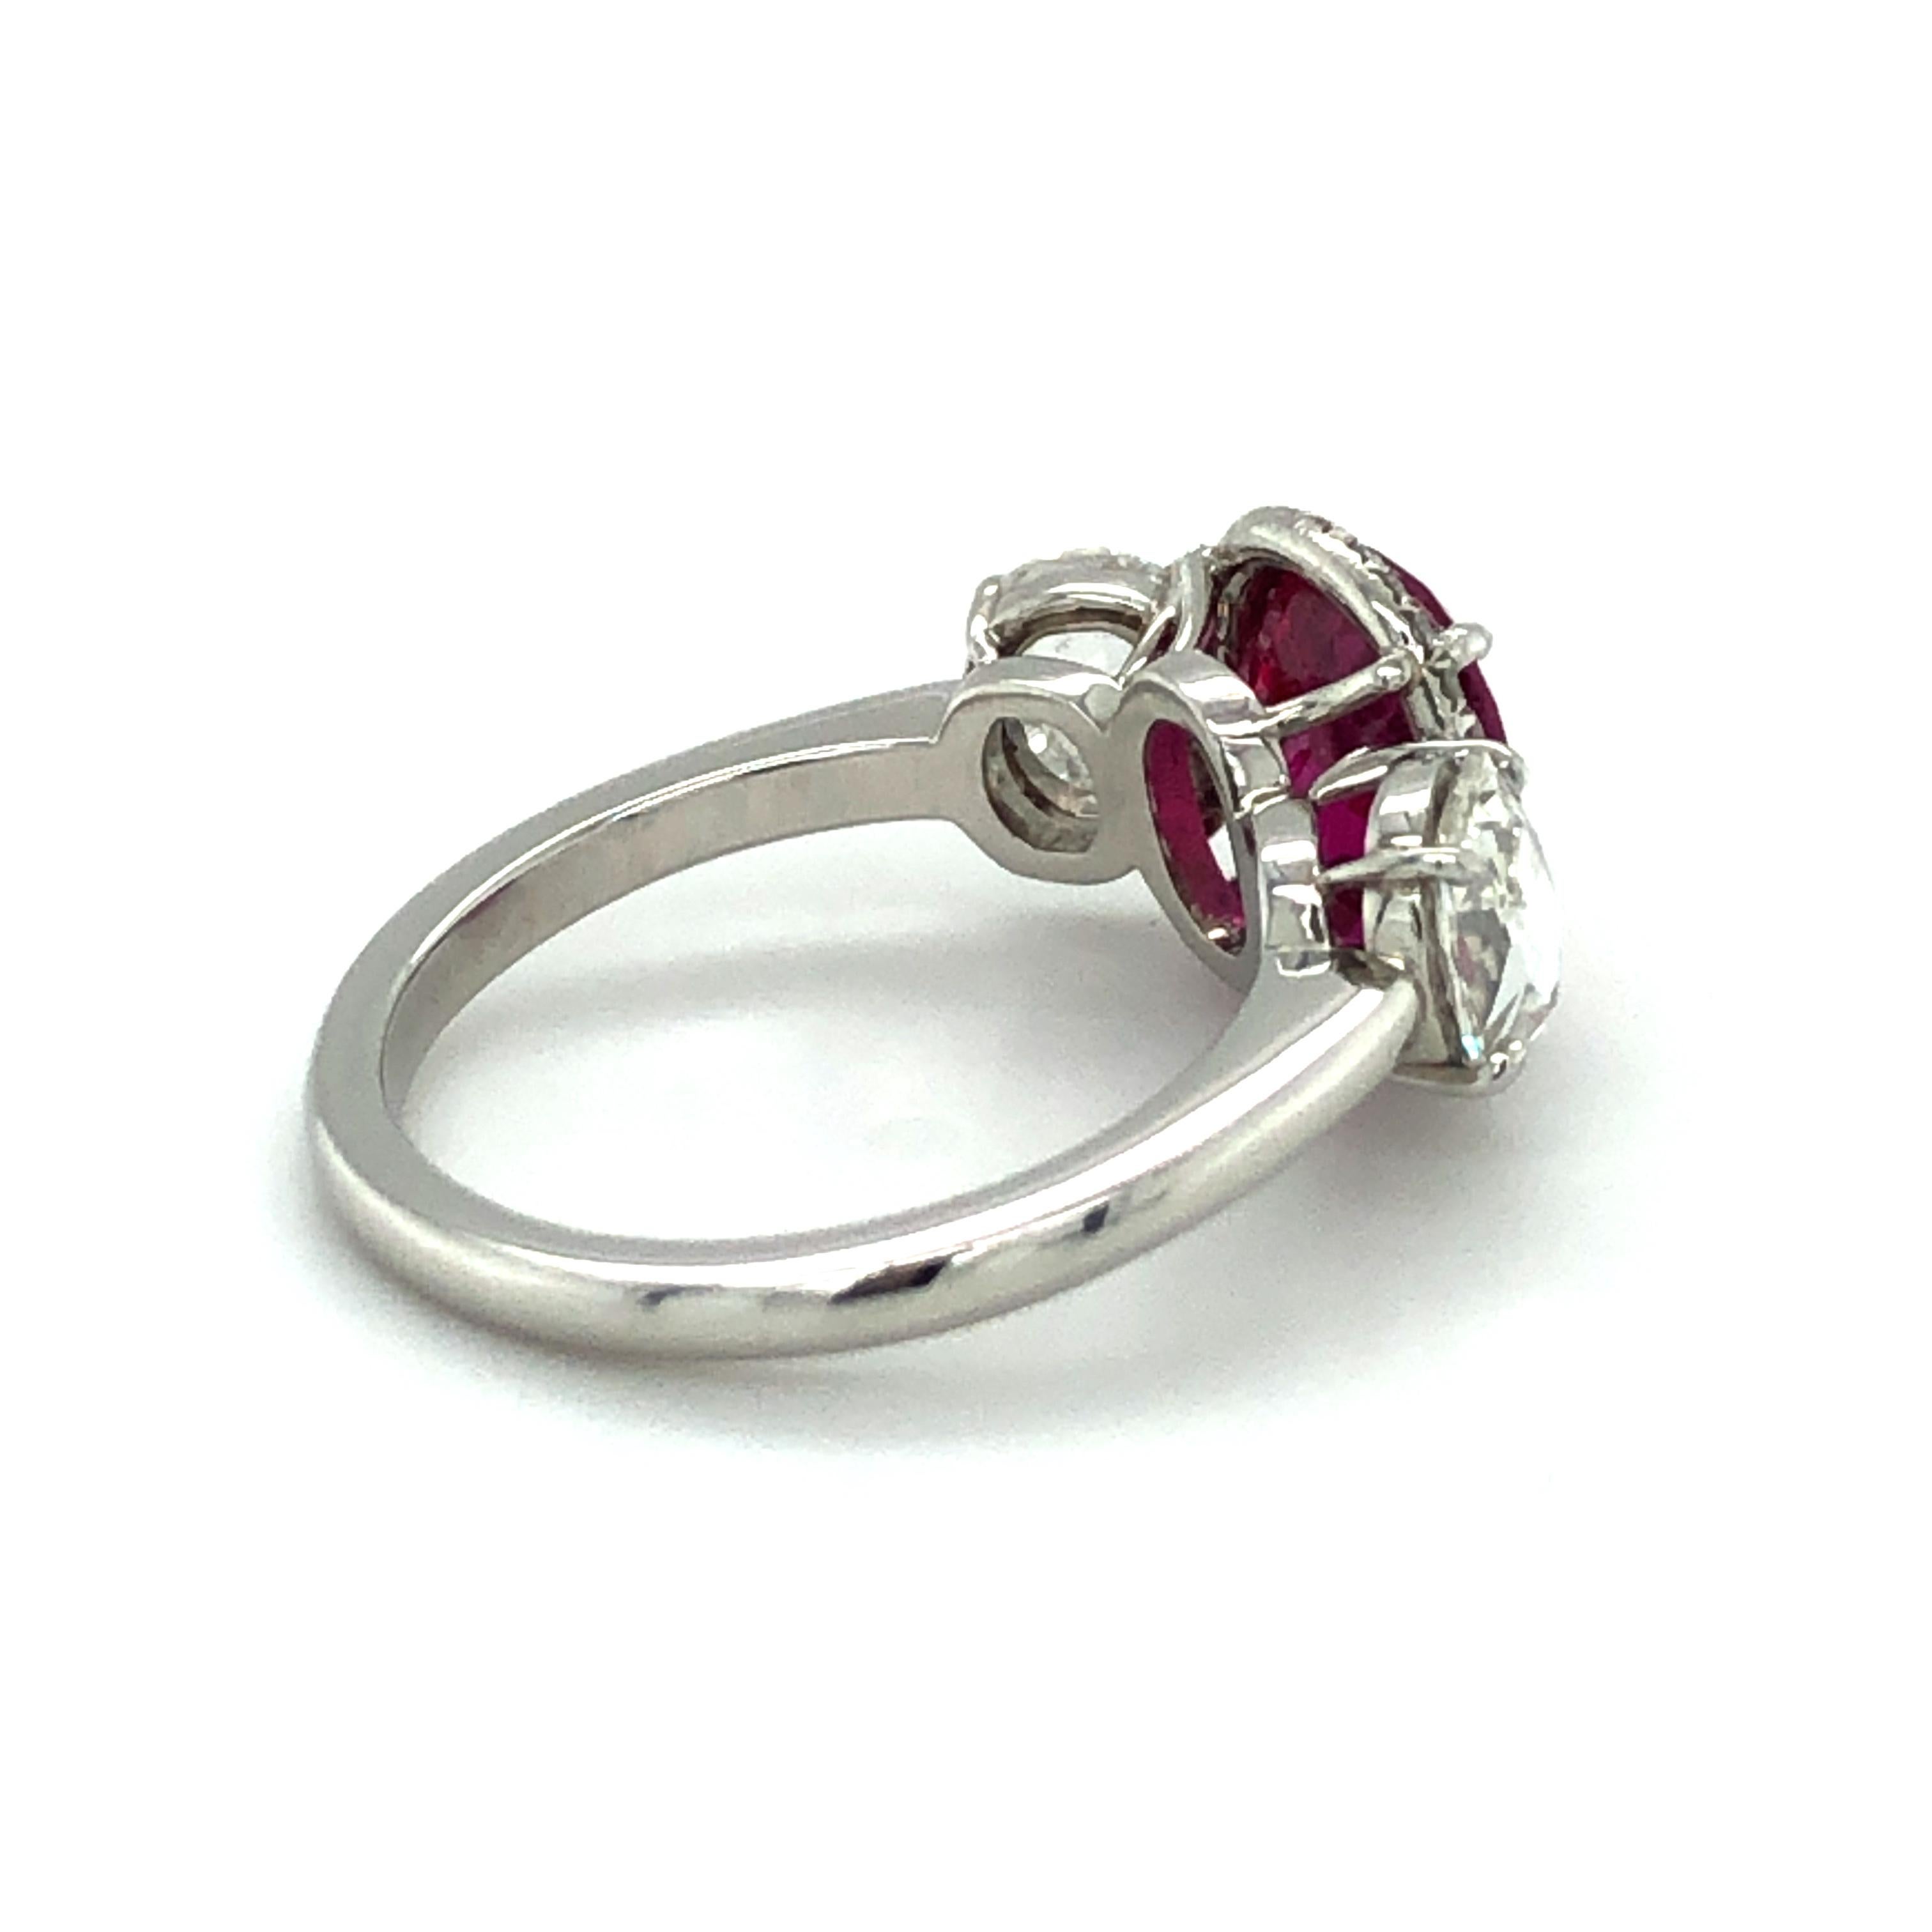 Superb 2.73 Carat Burma Ruby and Diamond Ring in Platinum 950 5